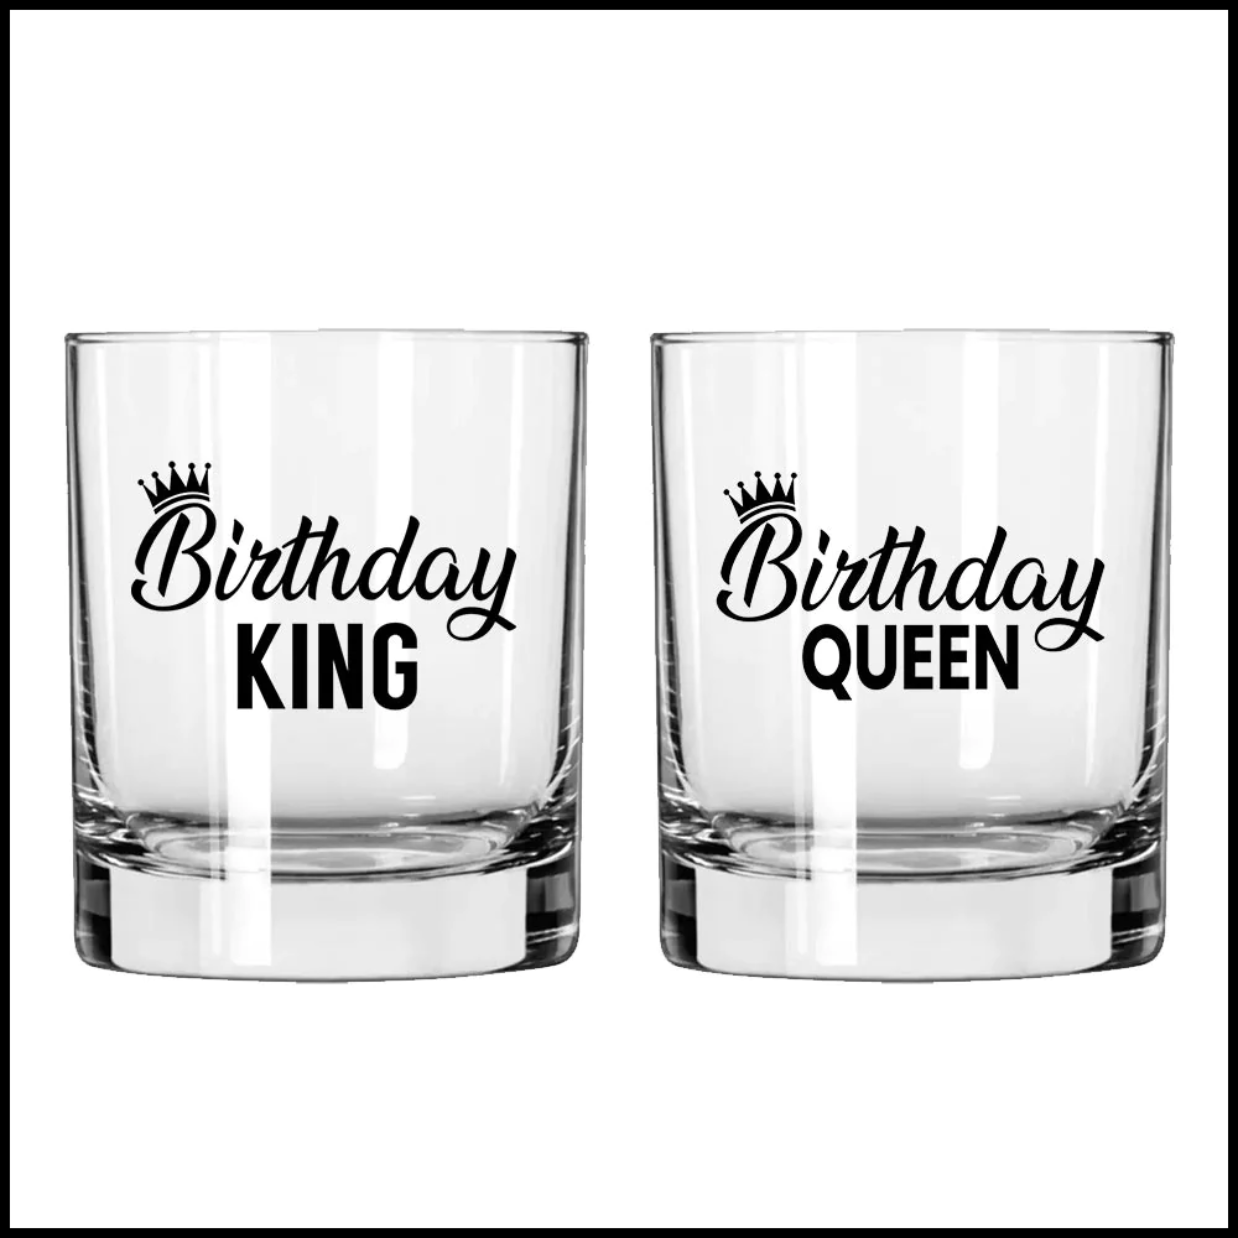 whisky glass for birthday